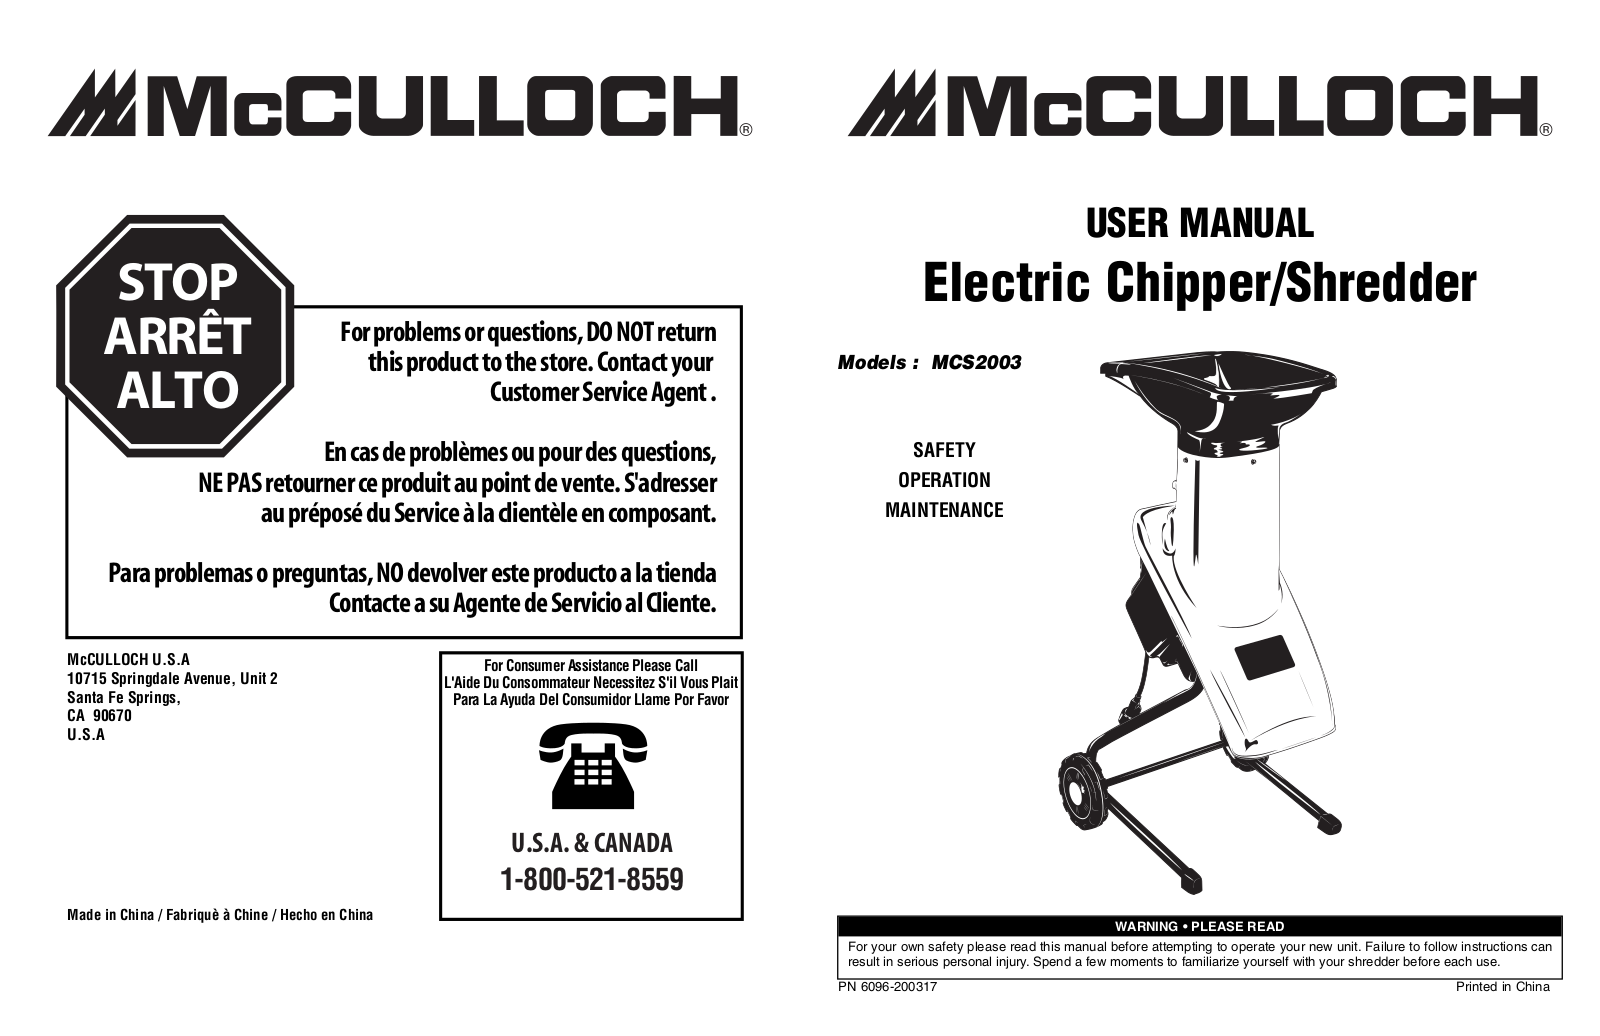 McCulloch MCS2003, 6096-200317, 966994701 User Manual